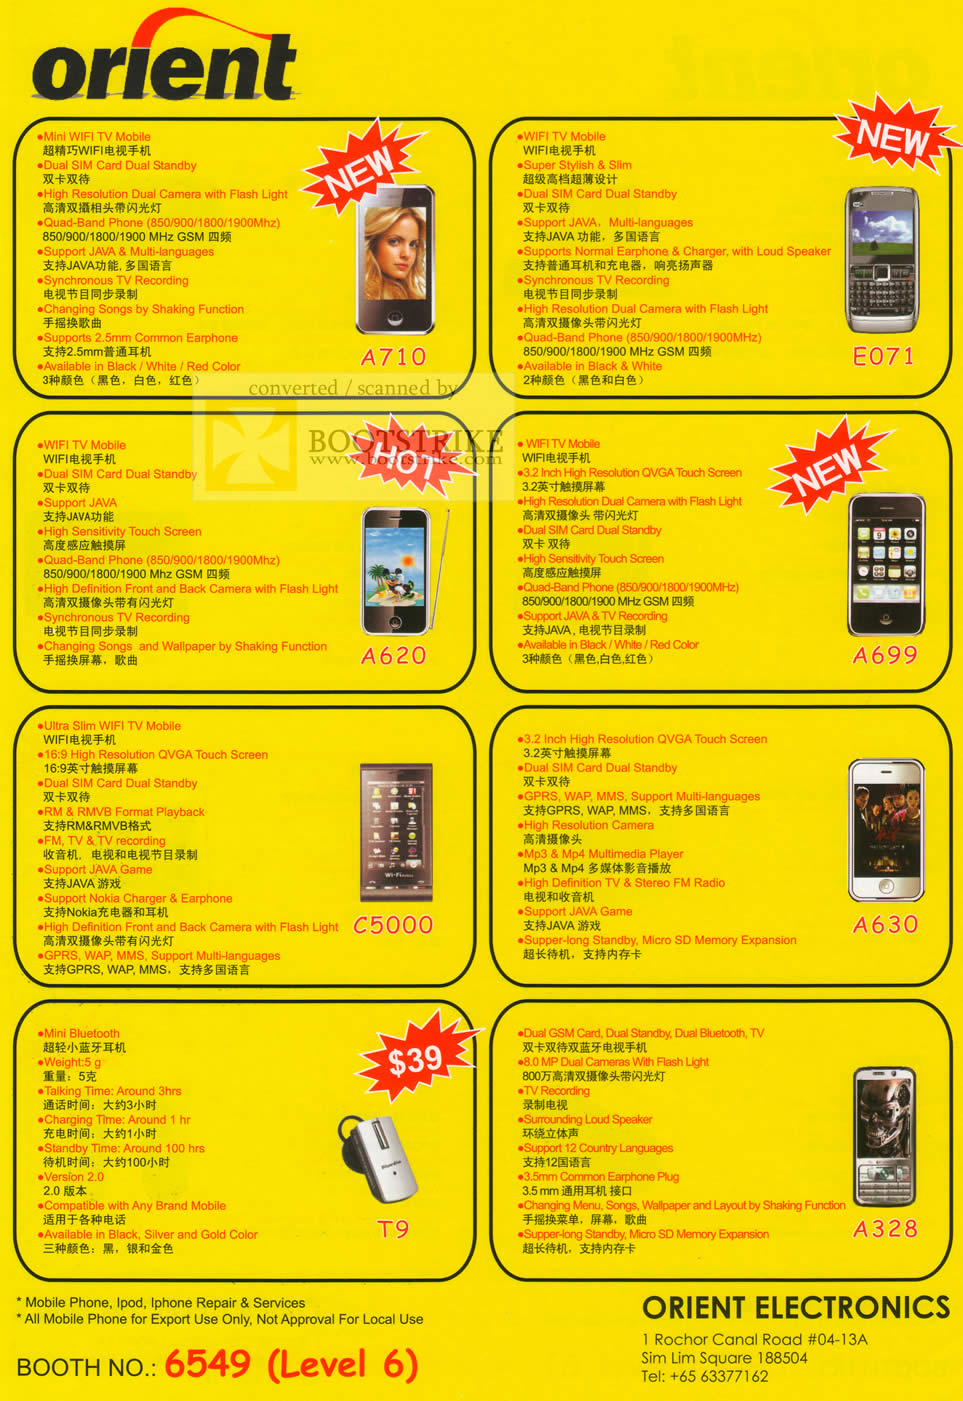 Sitex 2009 price list image brochure of Orient Mobile Phones Mini Wifi TV Mobile A710 E071 A620 A699 C5000 A630 T9 A328